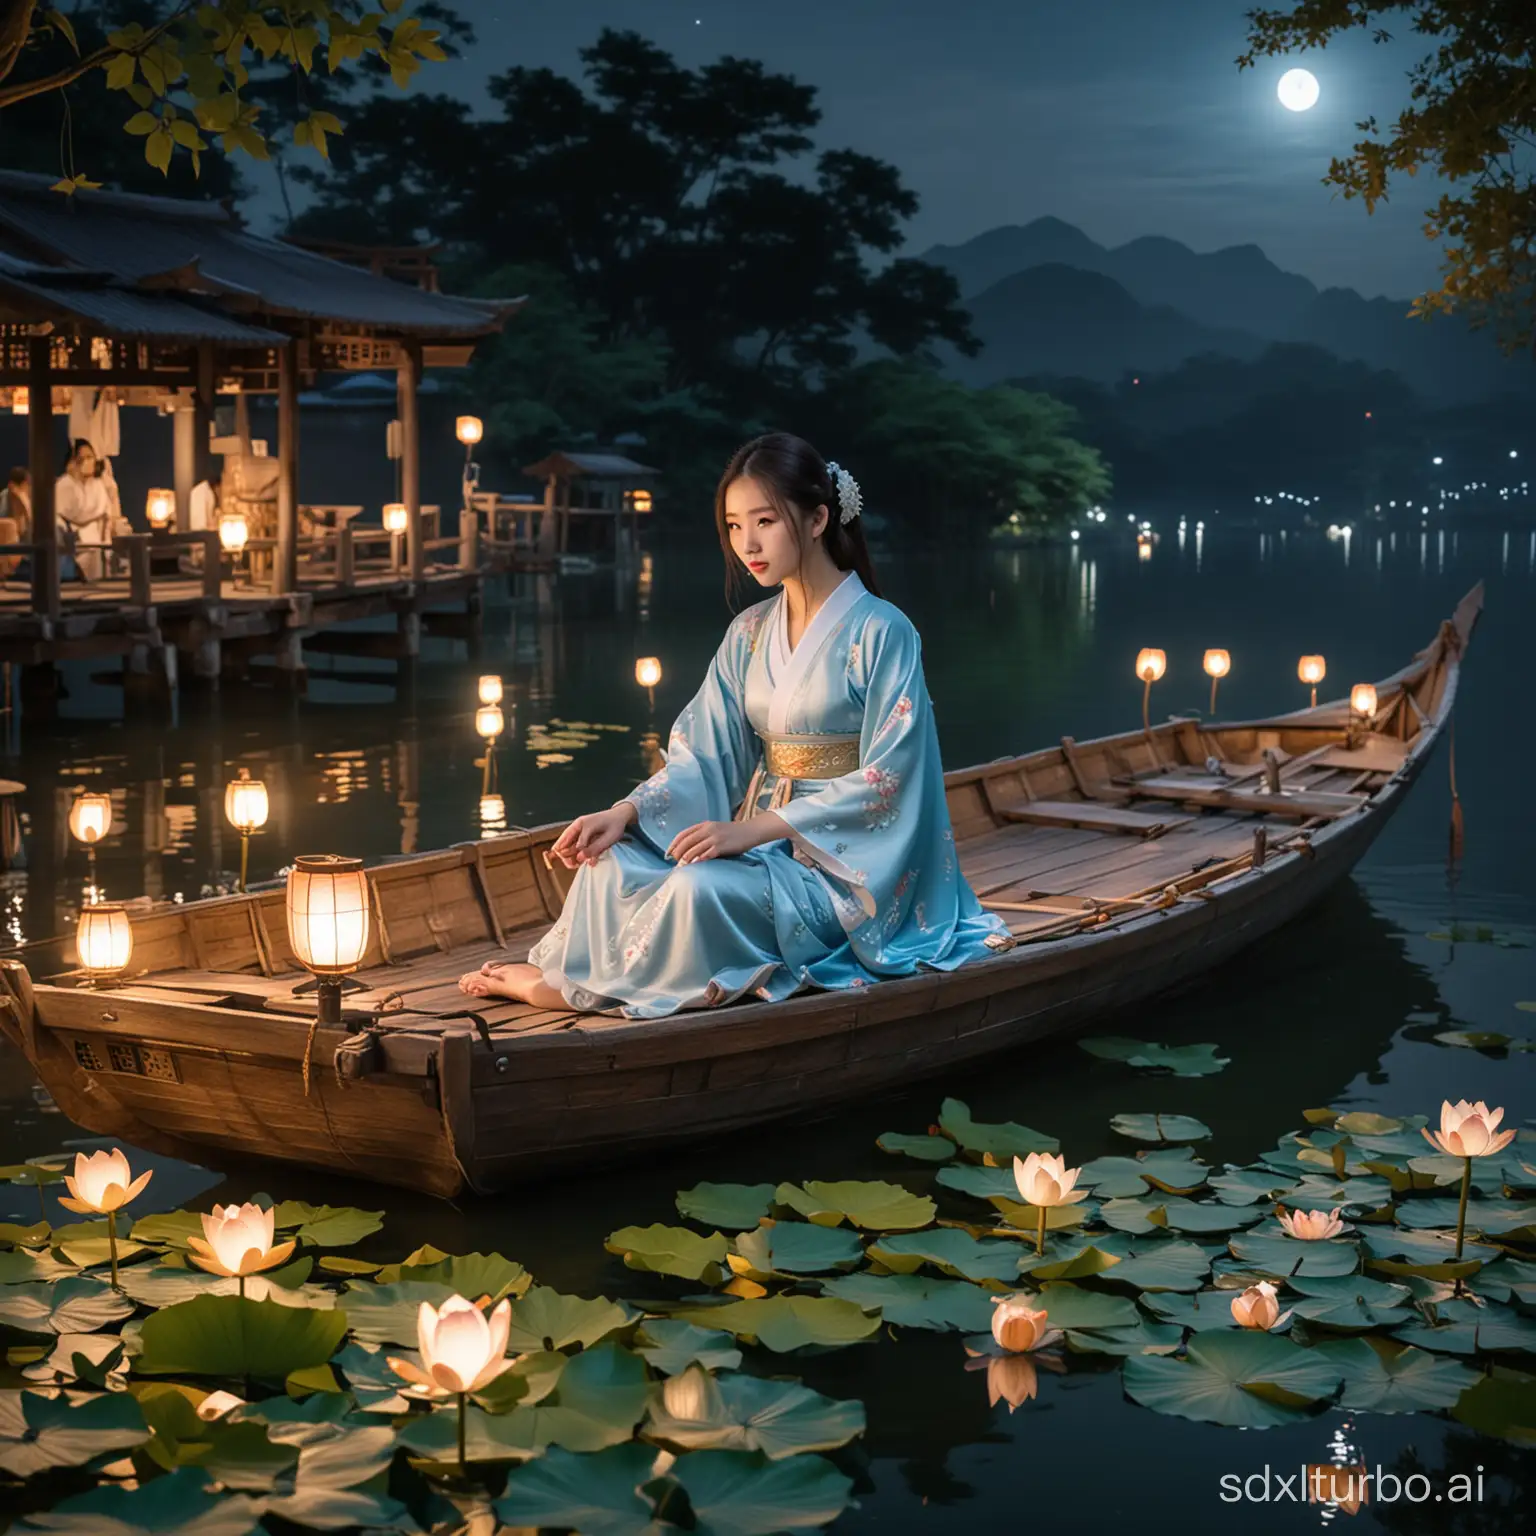 Tranquil-Night-Scene-Girl-in-Light-Blue-Hanfu-on-Fishing-Boat-Amid-Lotus-Flowers-and-Lanterns